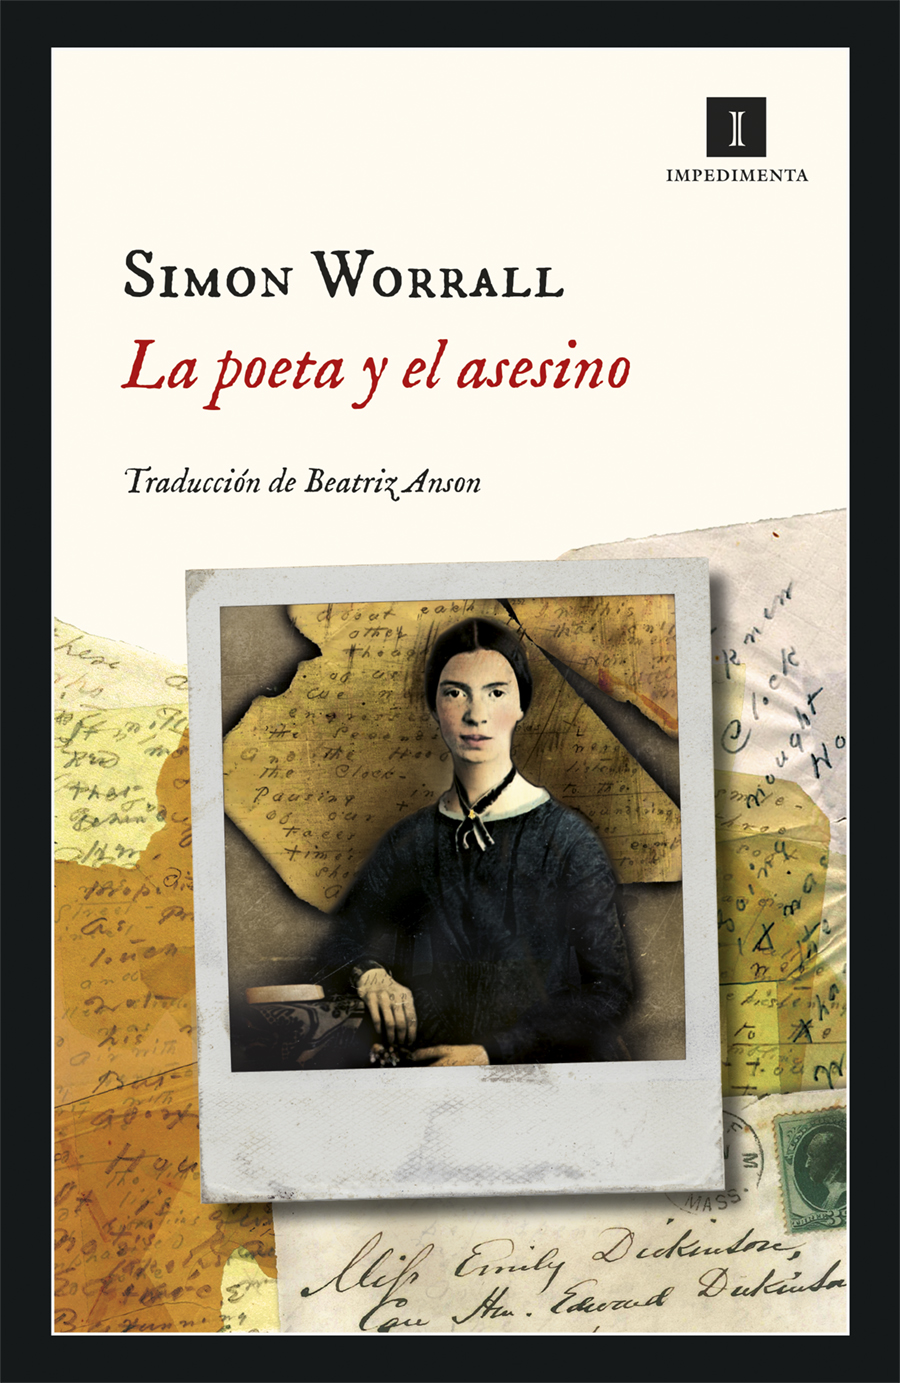 Imprescindibles de Troa: “La poeta y el asesino”, de Simon Worrall